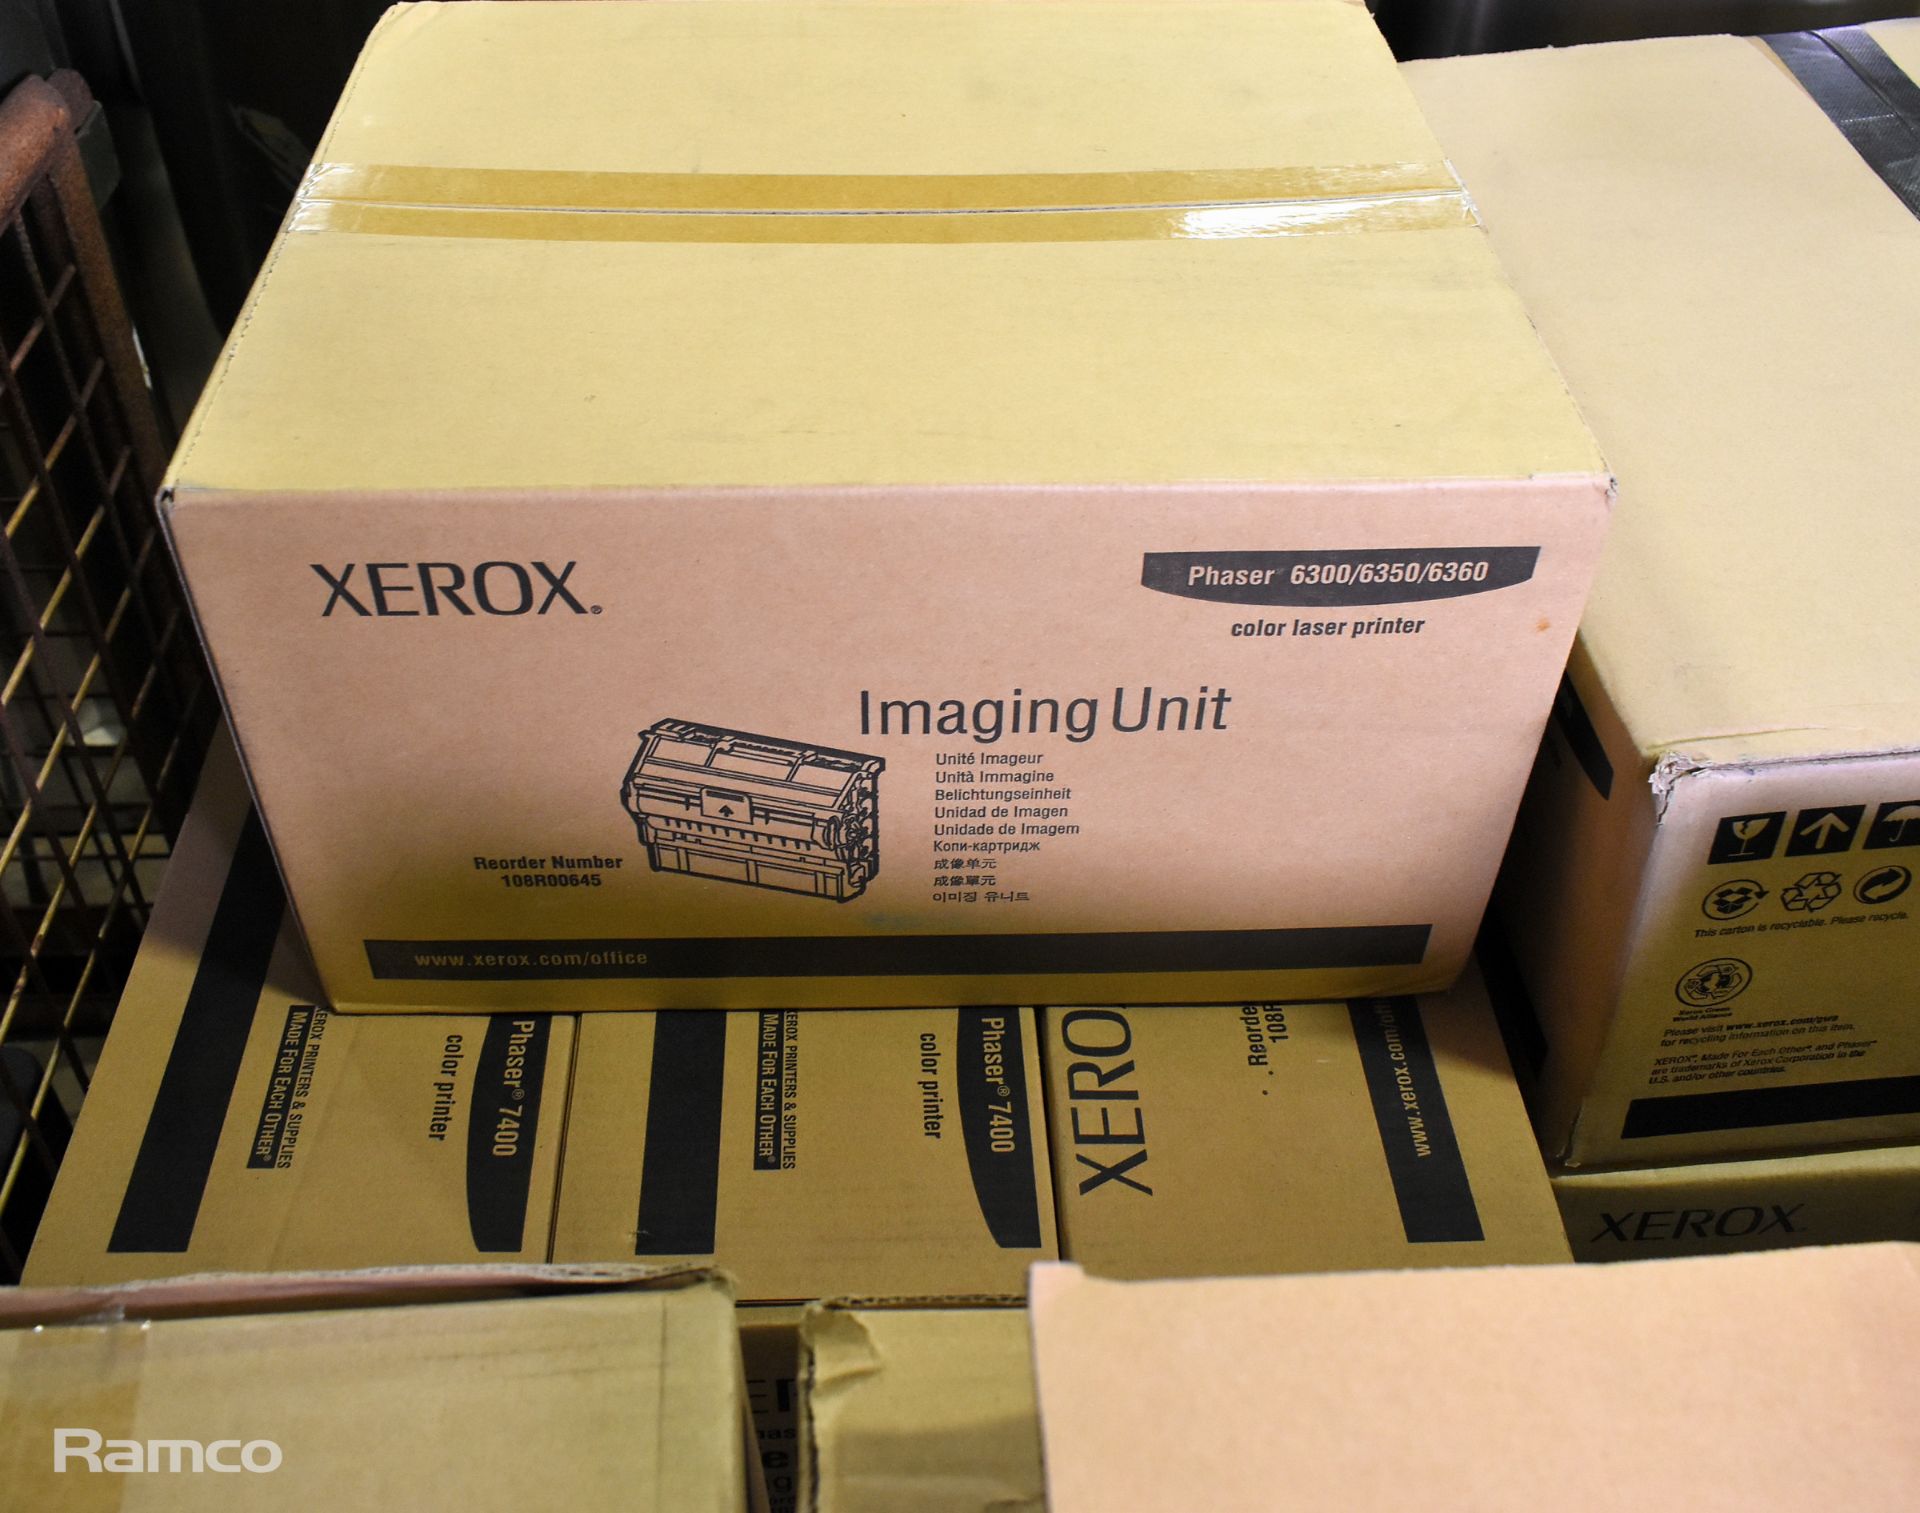 Printer toner cartridges - Xerox - Phaser 6700, Phaser 6360, Phaser 7400, Phaser 3600 - approx 45 - Image 4 of 7